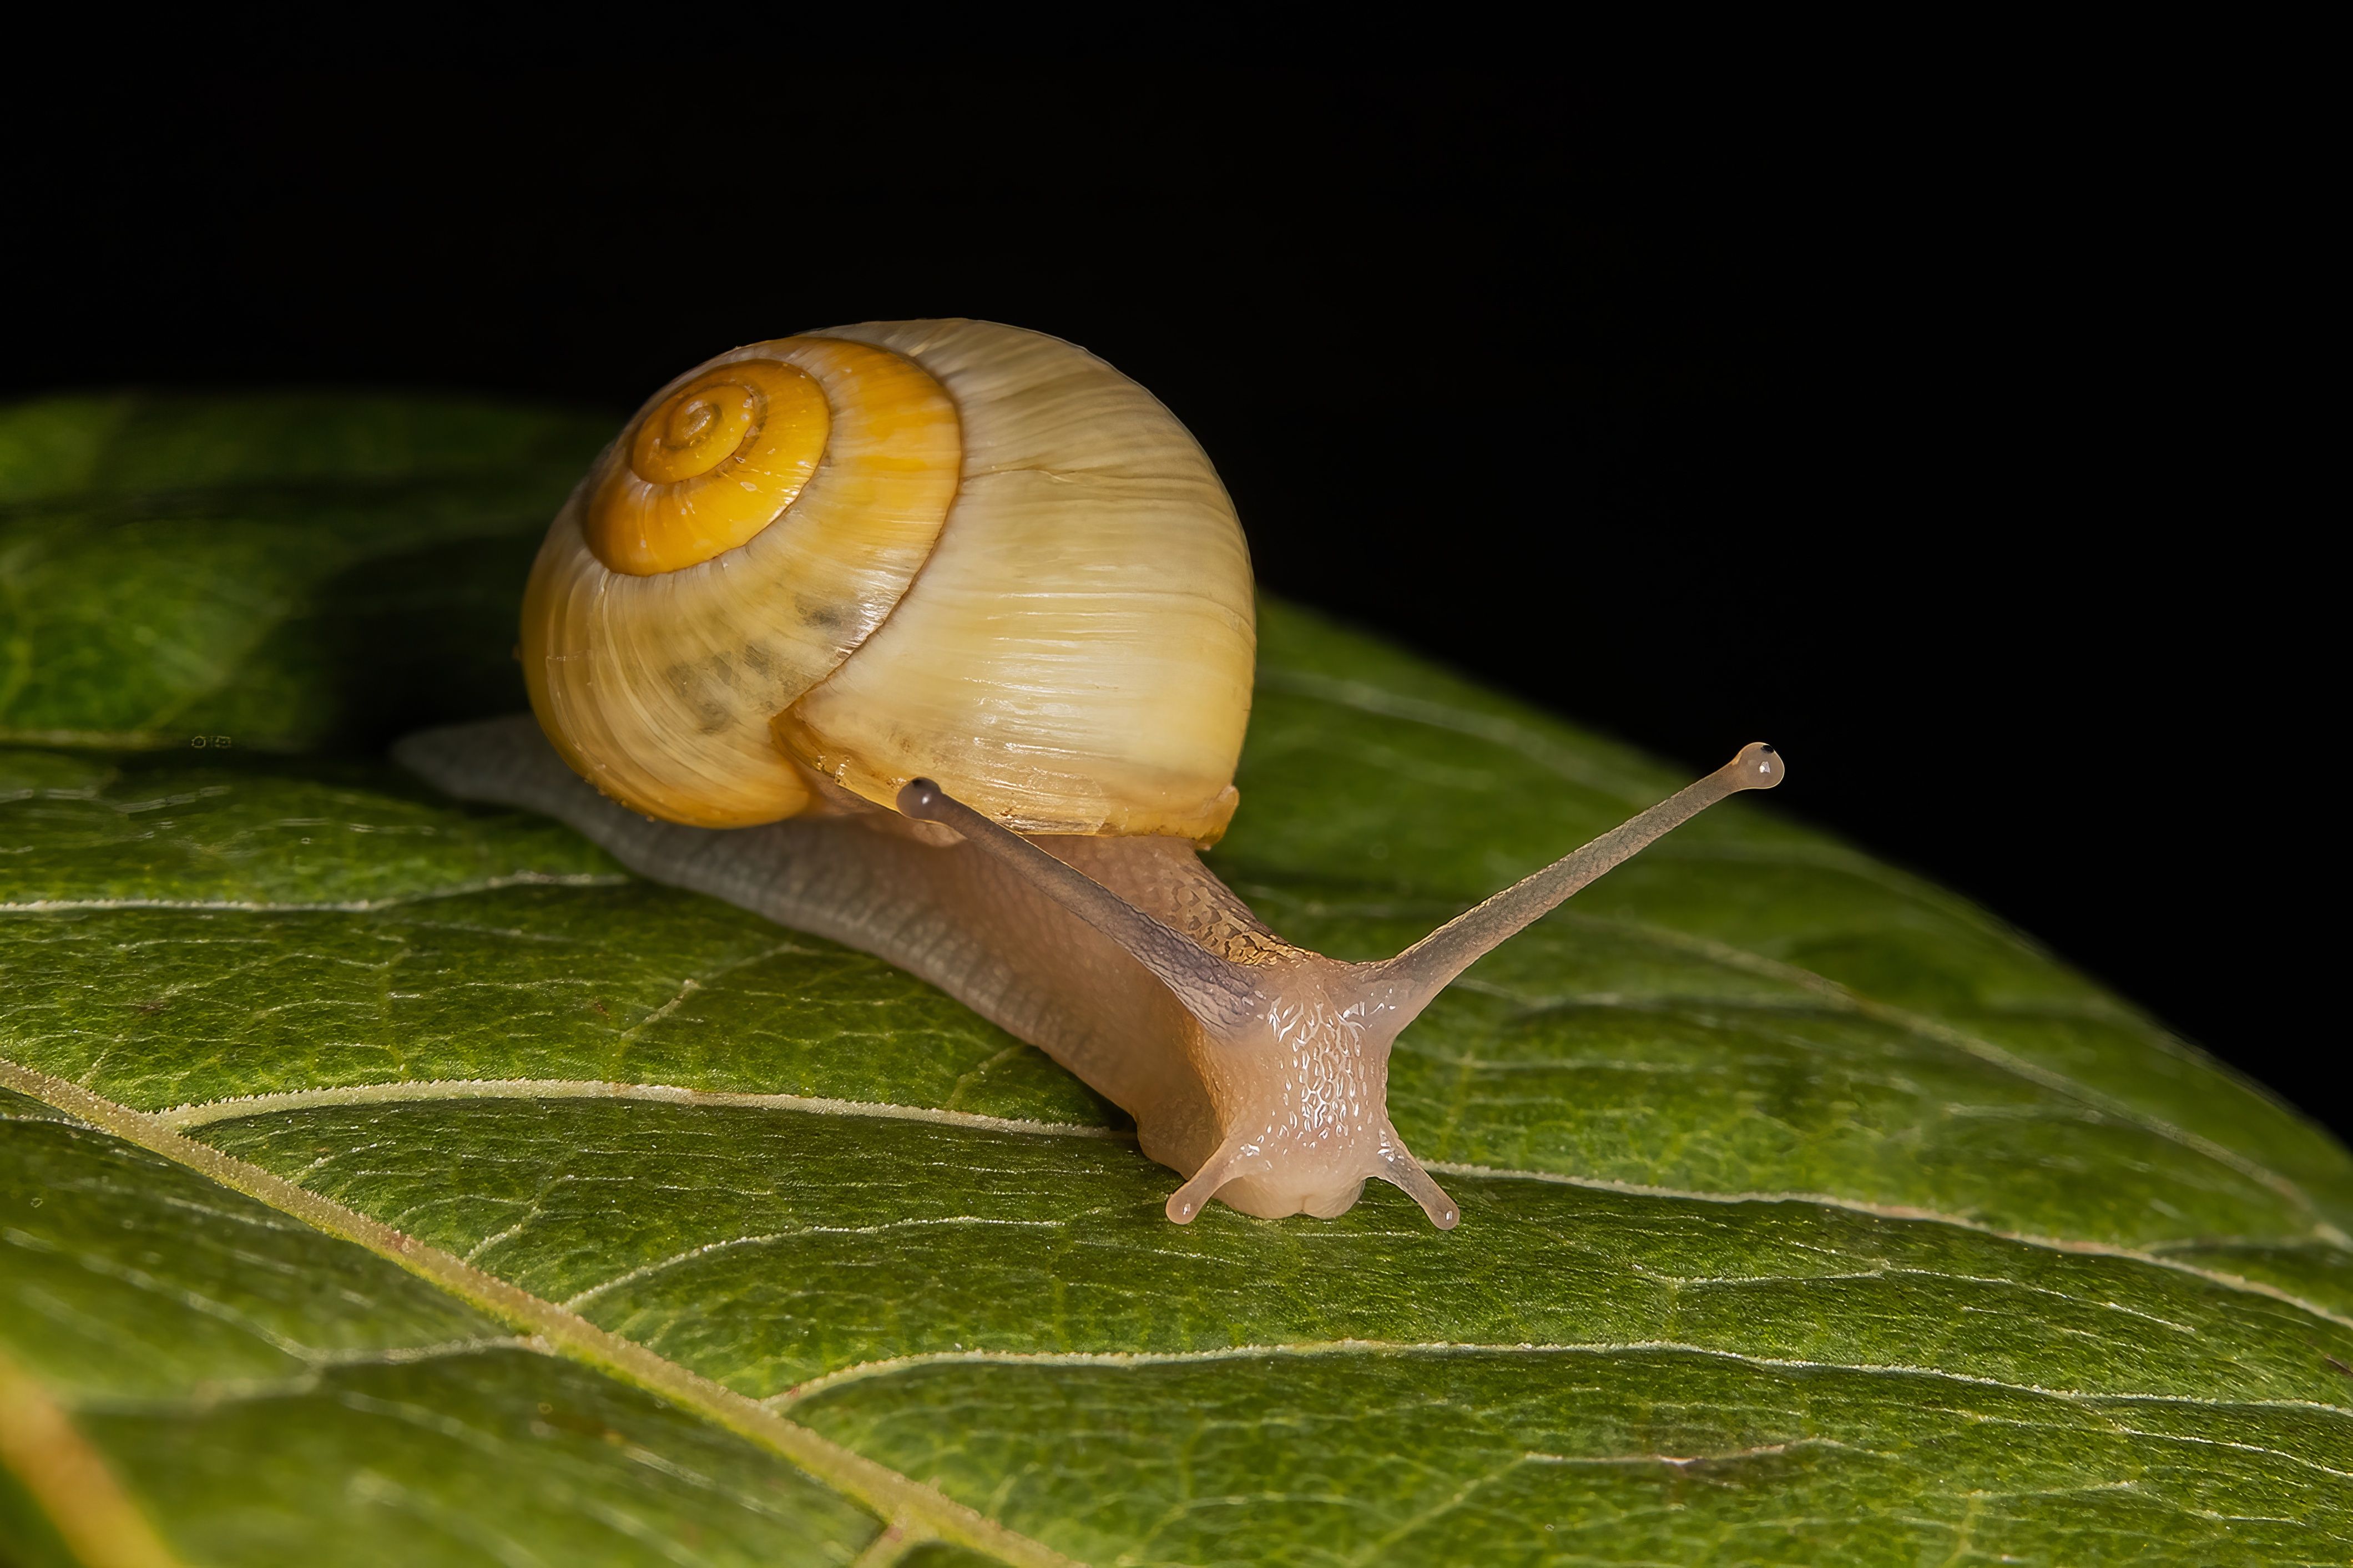 snail, gastropods, animal, macrophoto, nature, Stephane